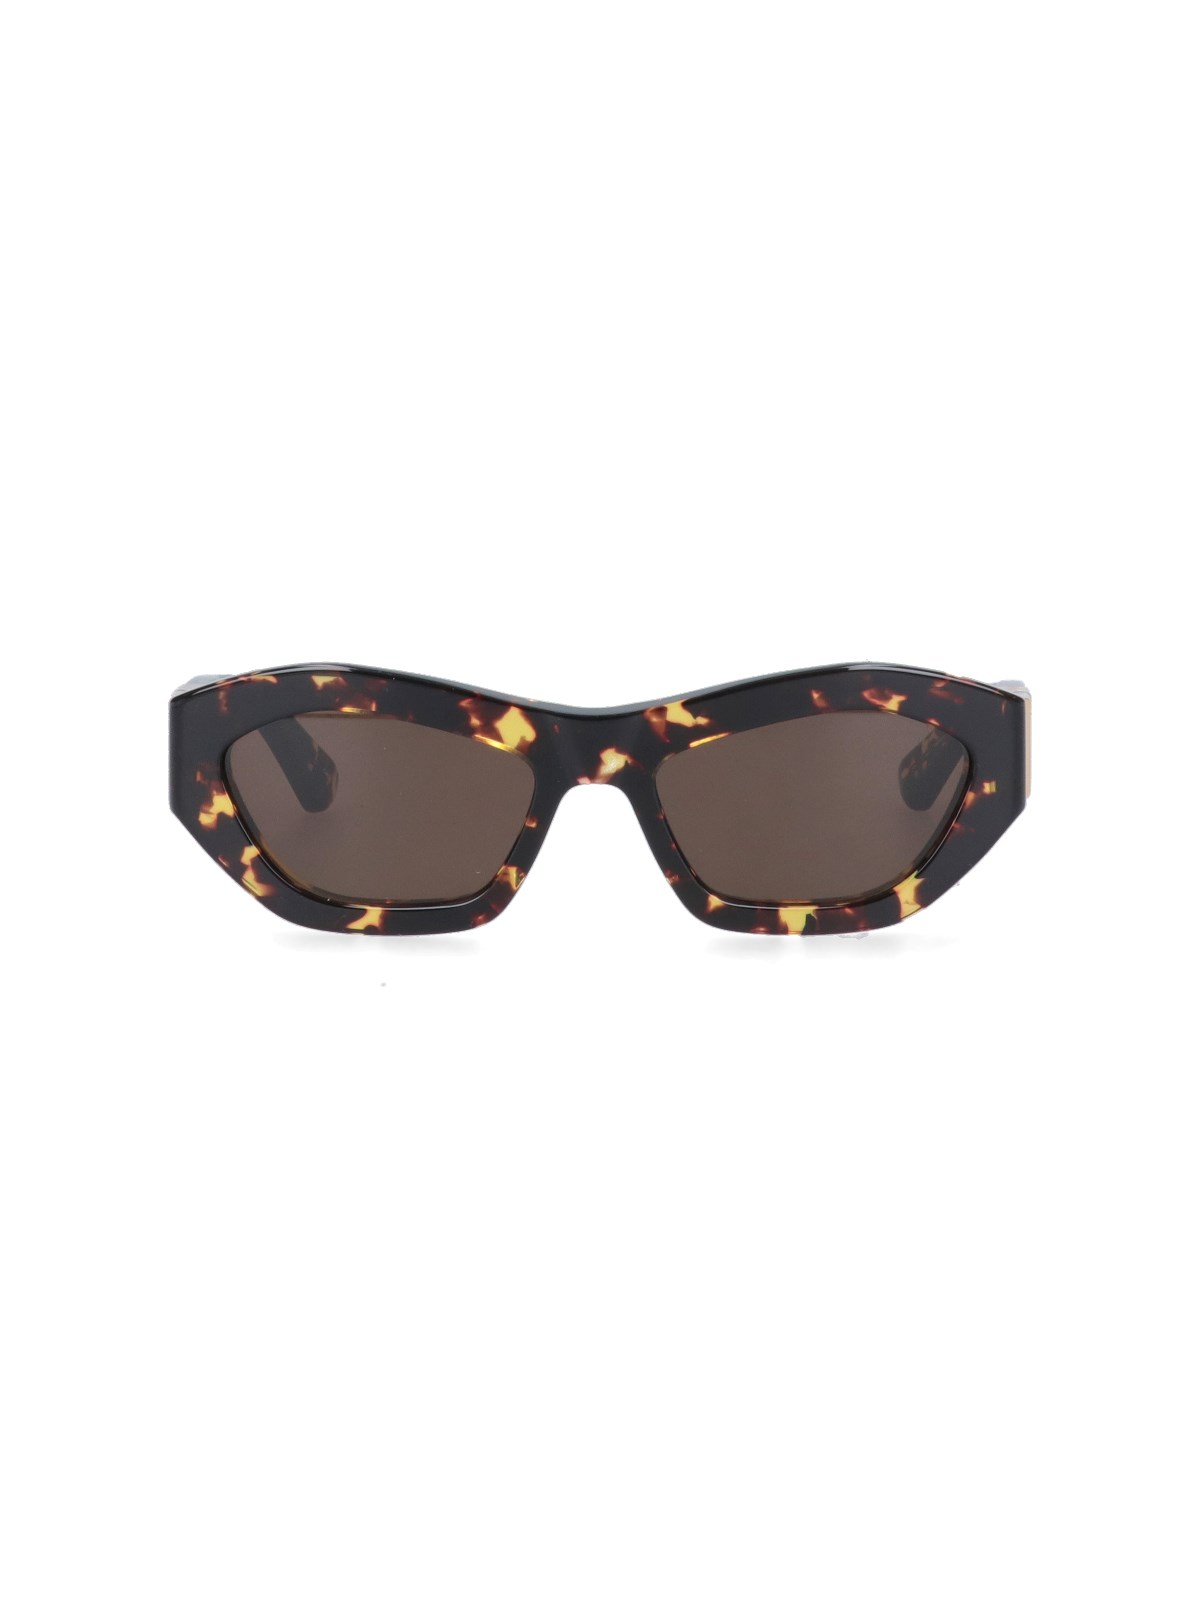 Bottega Veneta Tortoiseshell Angle Hexagonal Sunglasses In Marrone